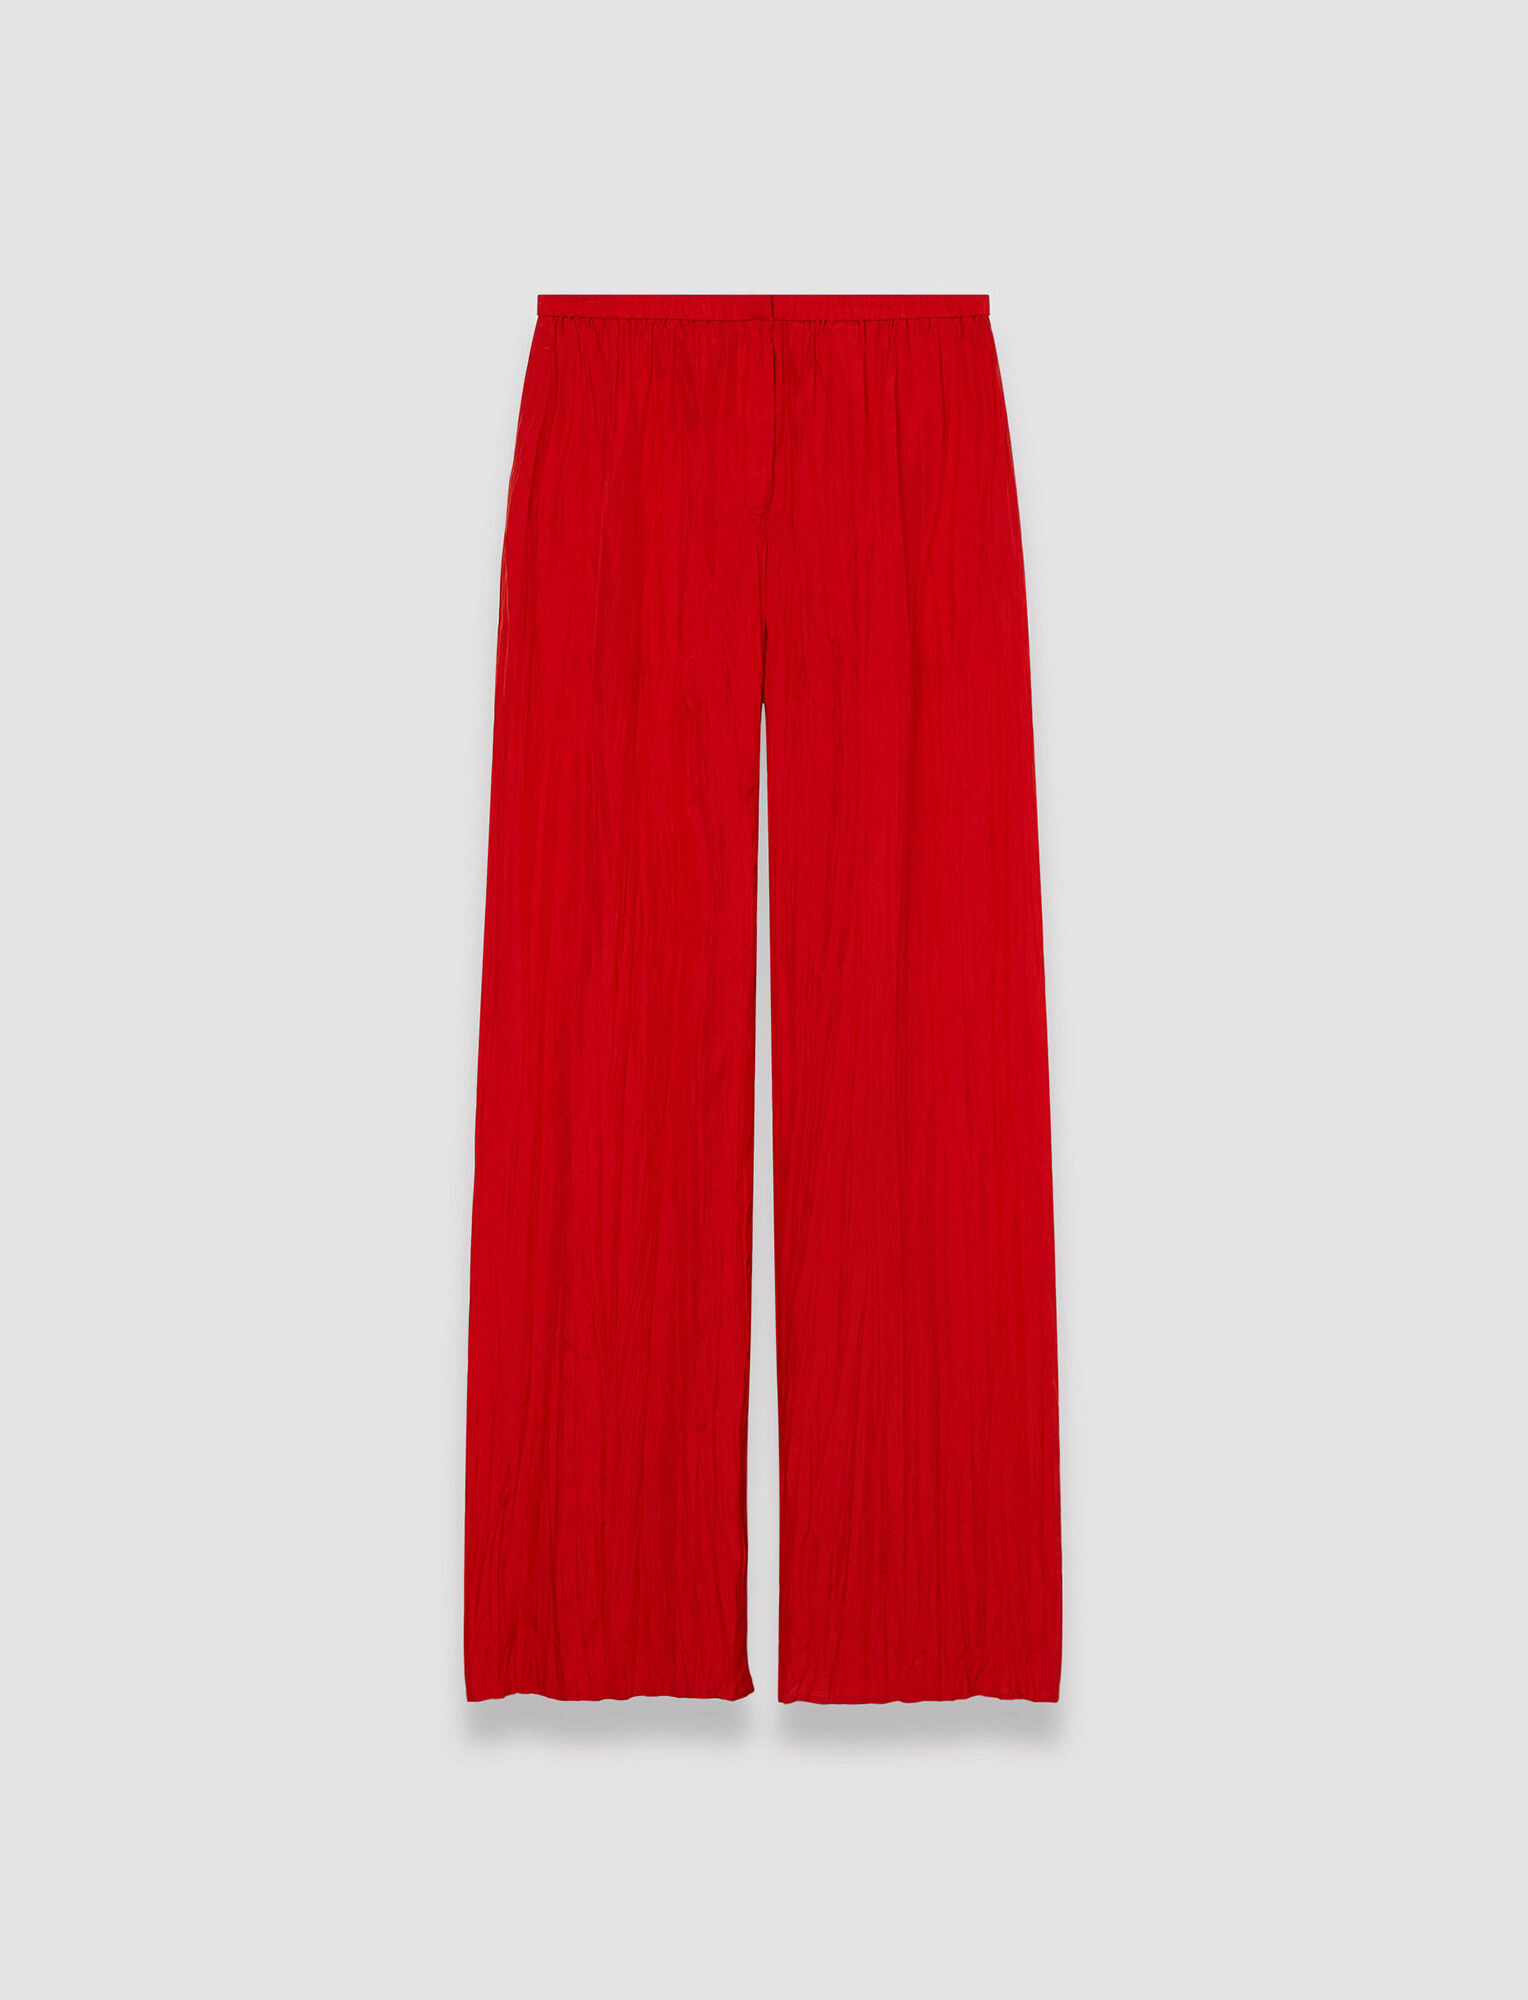 Joseph, Silk Habotai Thoresby Trousers, in Crimson